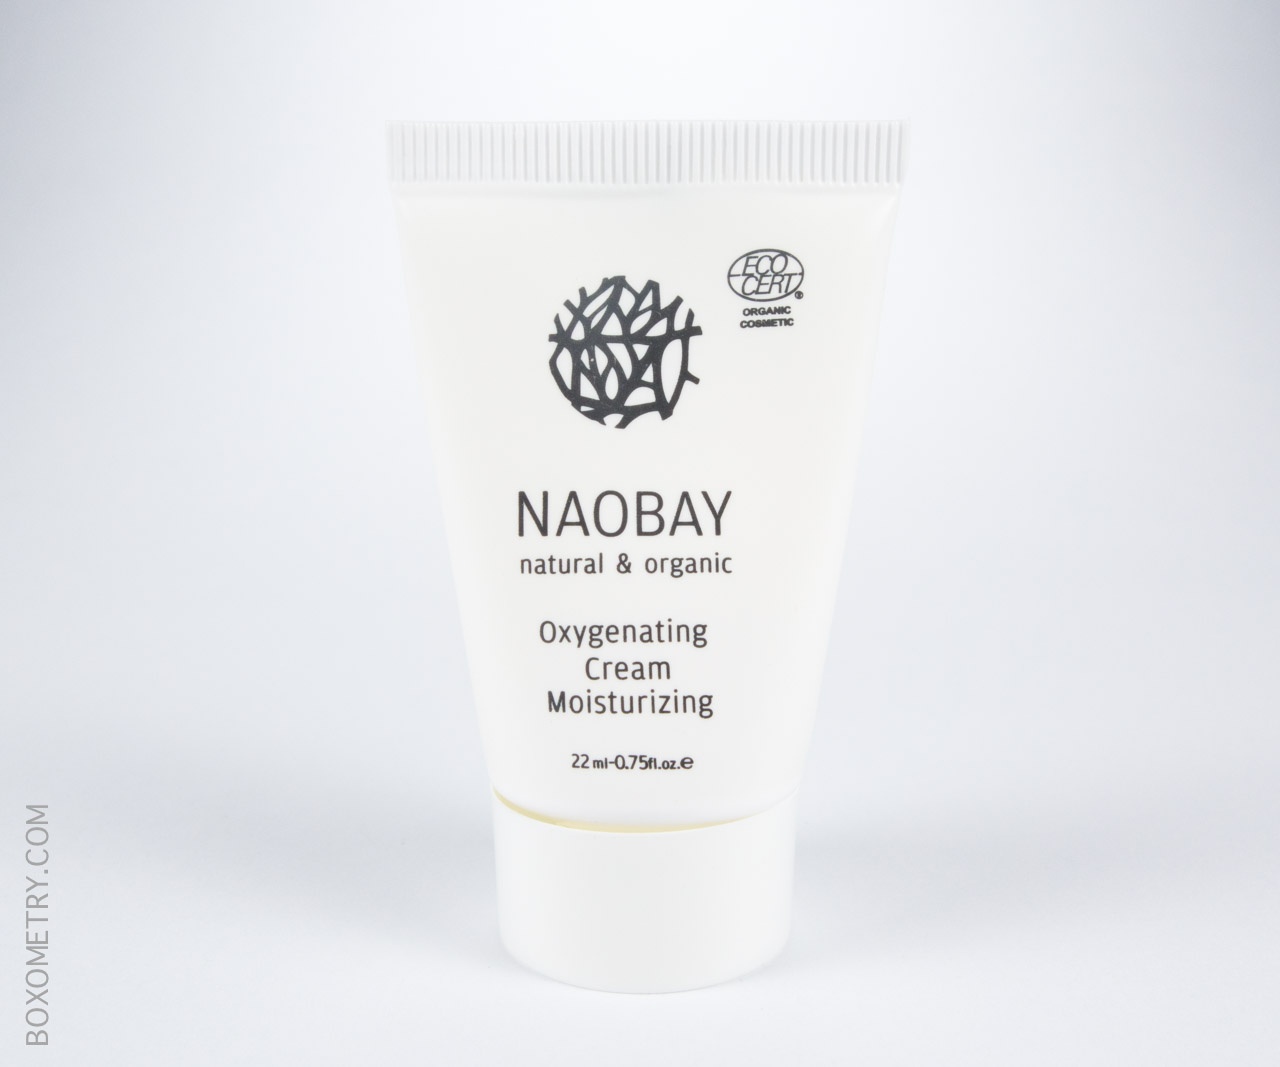 Boxometry Ipsy September 2015 Review - Naobay Natural & Organic Oxygenating Moisturizing Cream